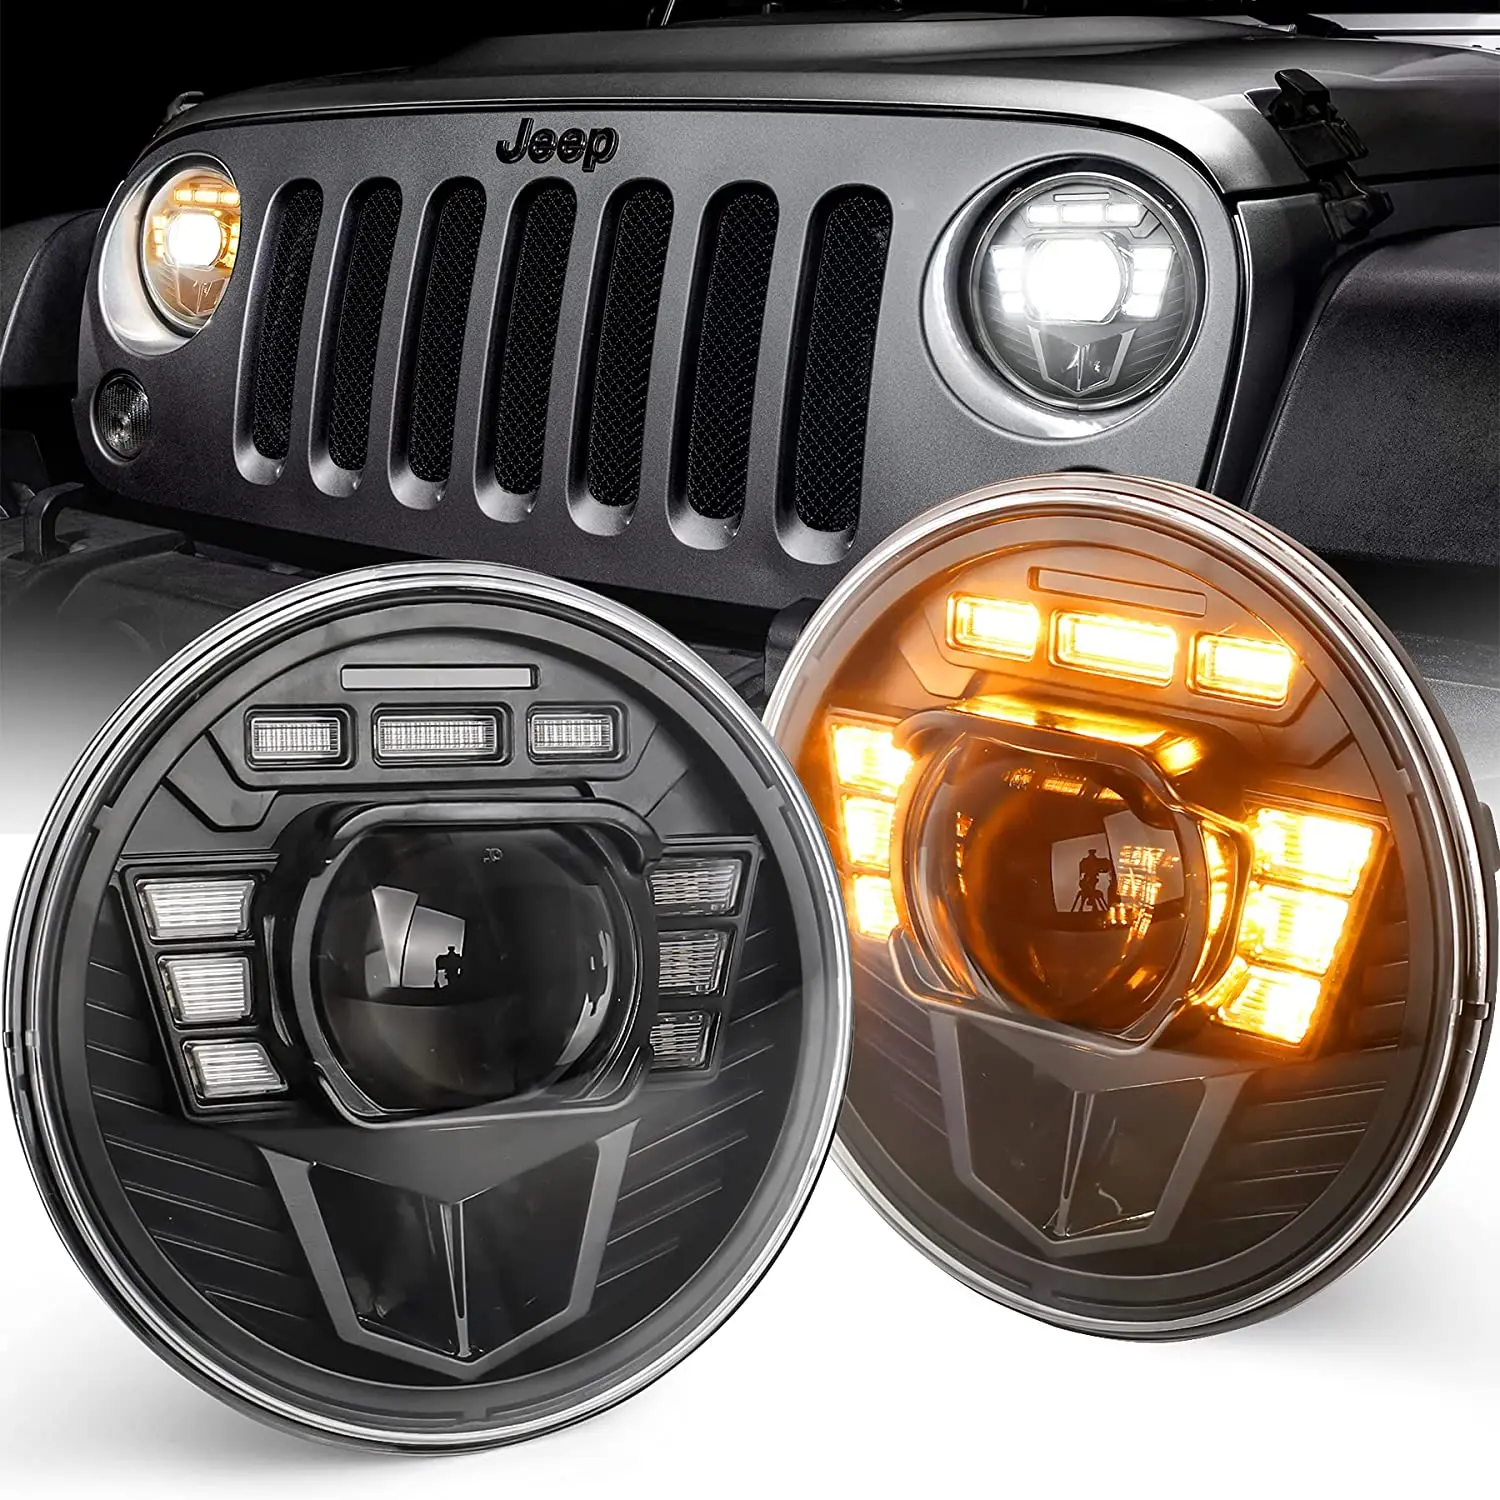 Ovovs Accessories Car 12v Headlight With Amber Turn Signal 7 Inch Led  Headlight For Jeep Wrangler Jk Tj Cj Lj Toyota Hummer H2 - Buy 7 Inch Led  Headlight,12v Led Headlight,7 Inch